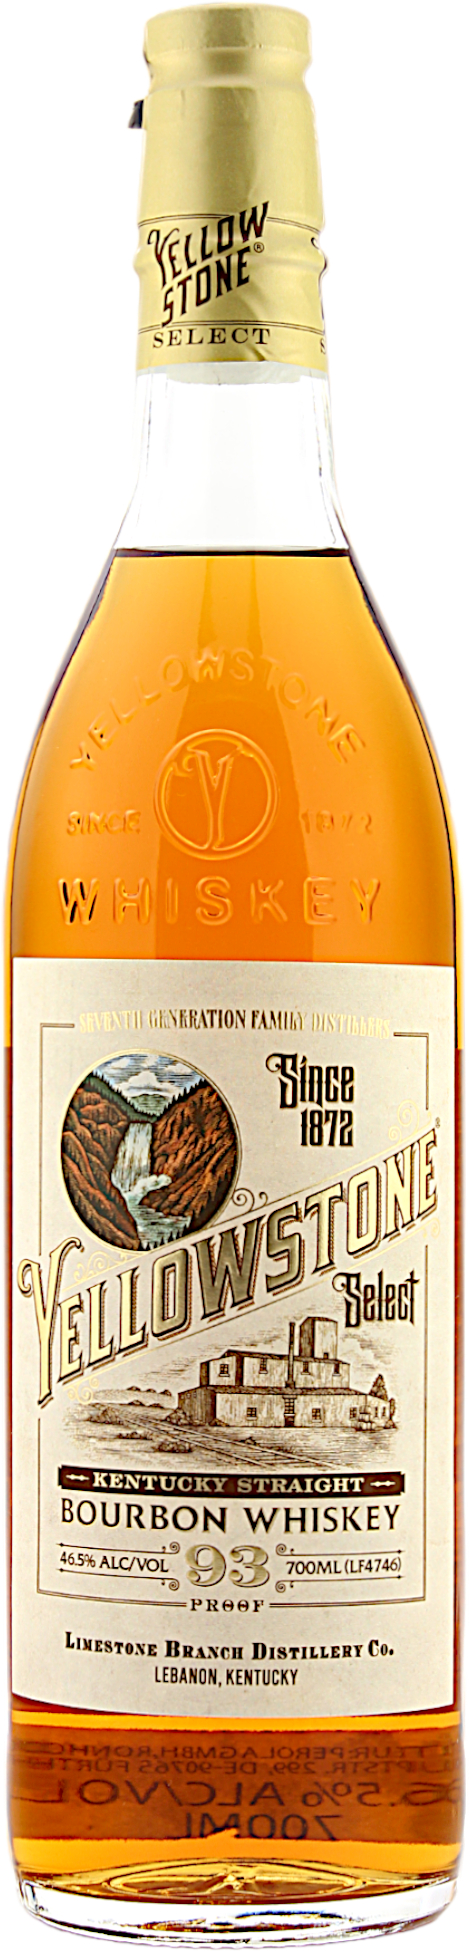 Yellowstone Select Kentucky Straight Bourbon Whiskey 46.5% 0,7l